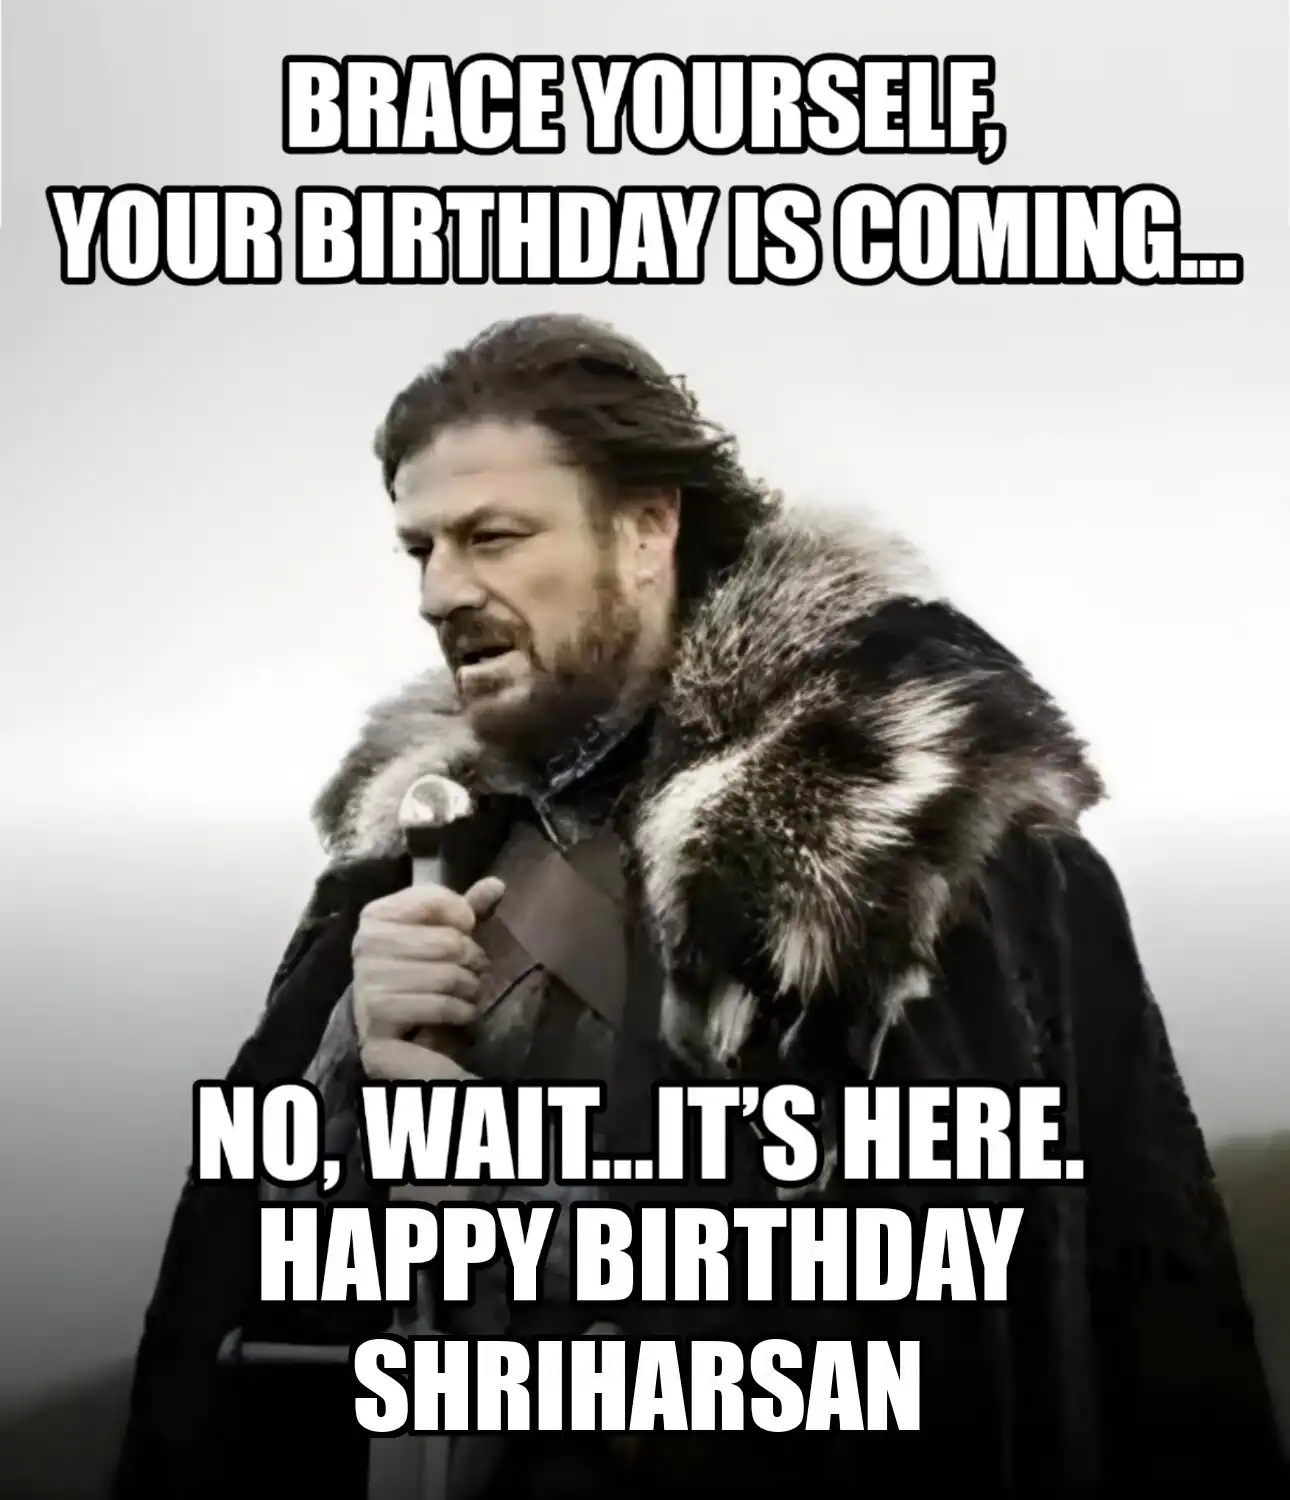 Happy Birthday Shriharsan Brace Yourself Your Birthday Is Coming Meme